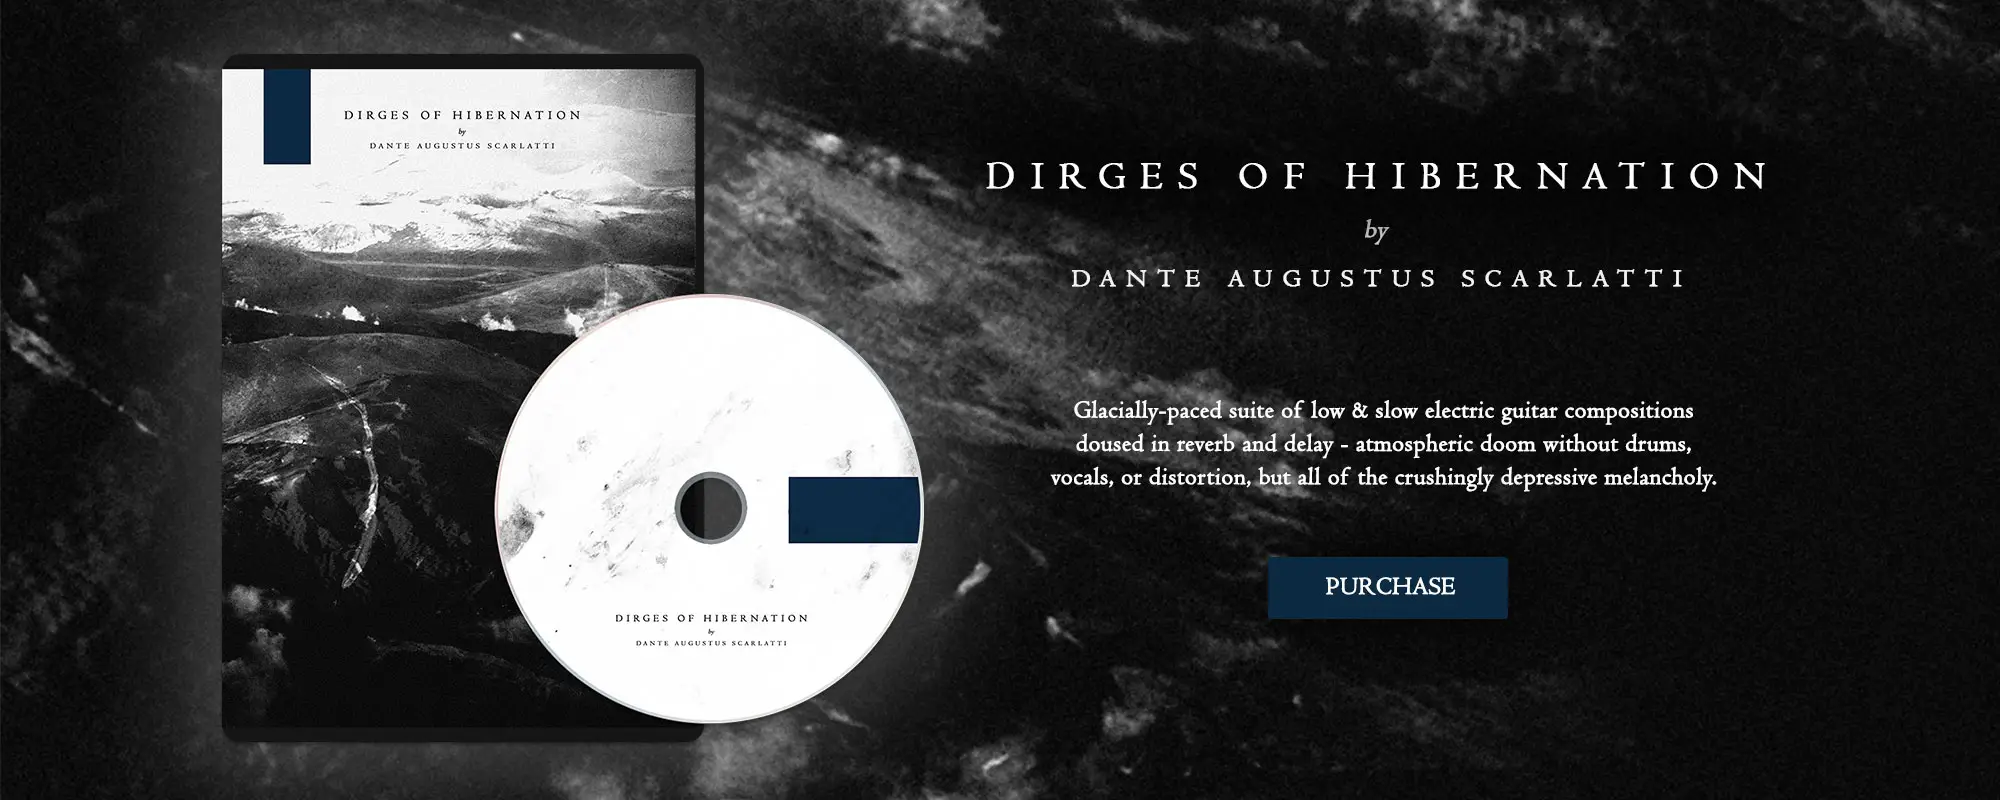 Dante Augustus Scarlatti - Dirges of Hibernation